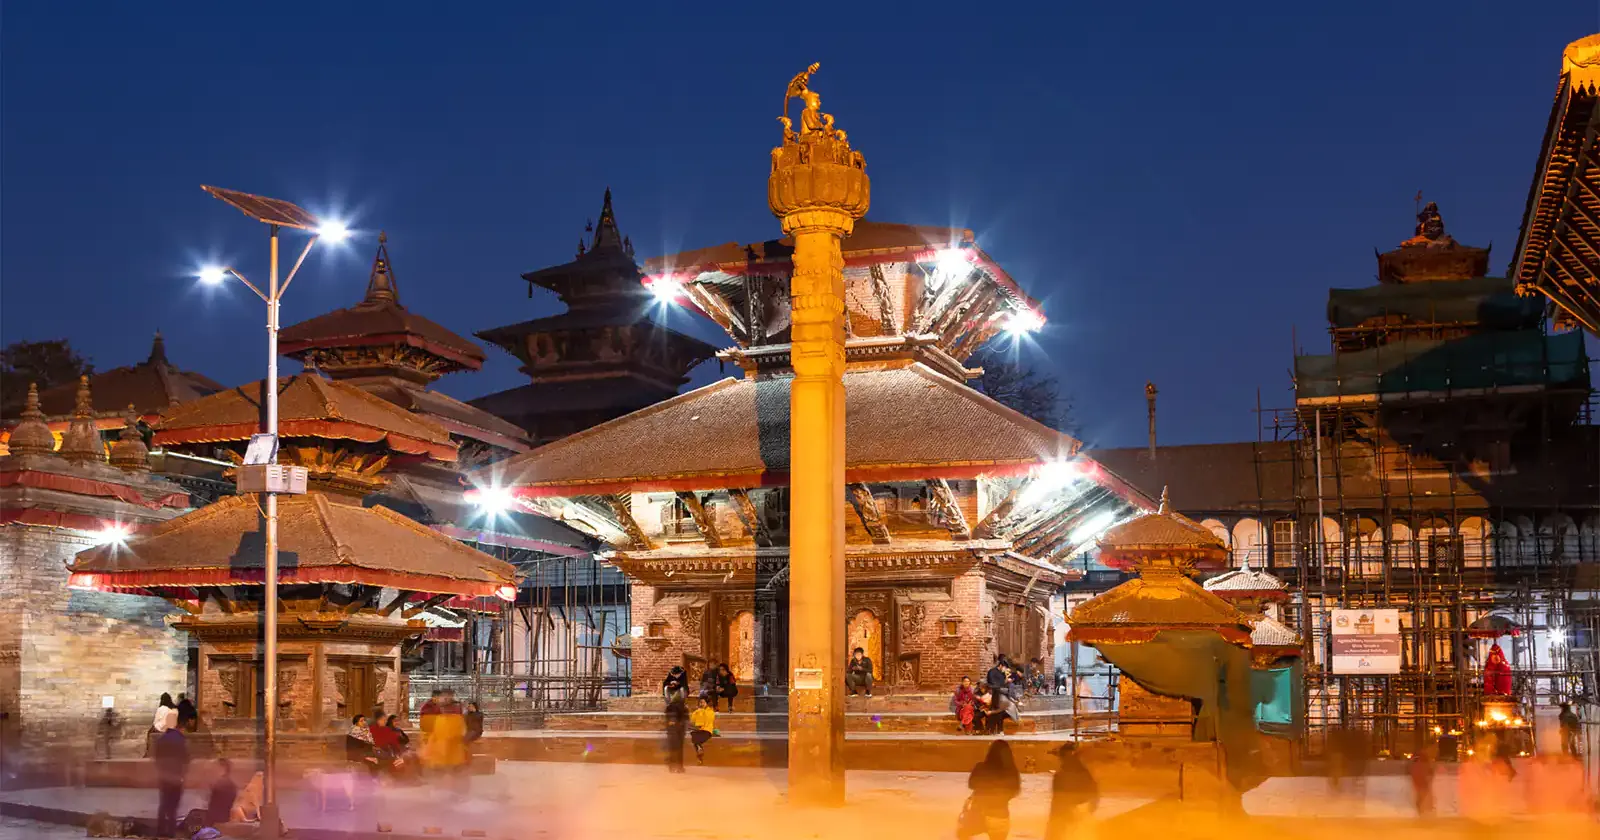 Kathmandu Durbar Square at night